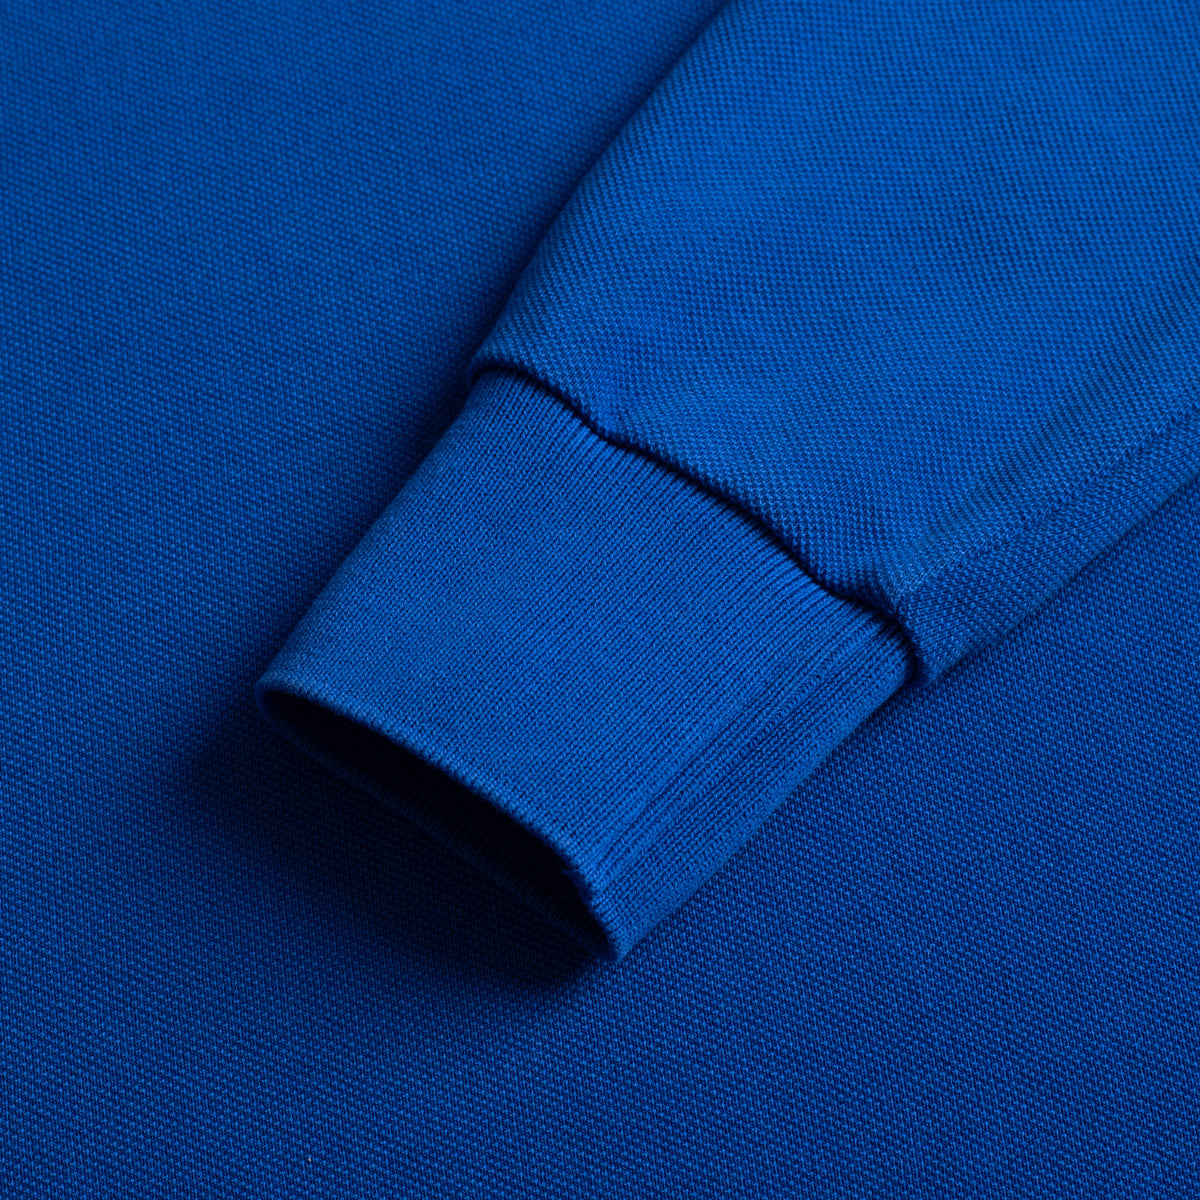 Royal Blue Long Sleeved Polo Shirt